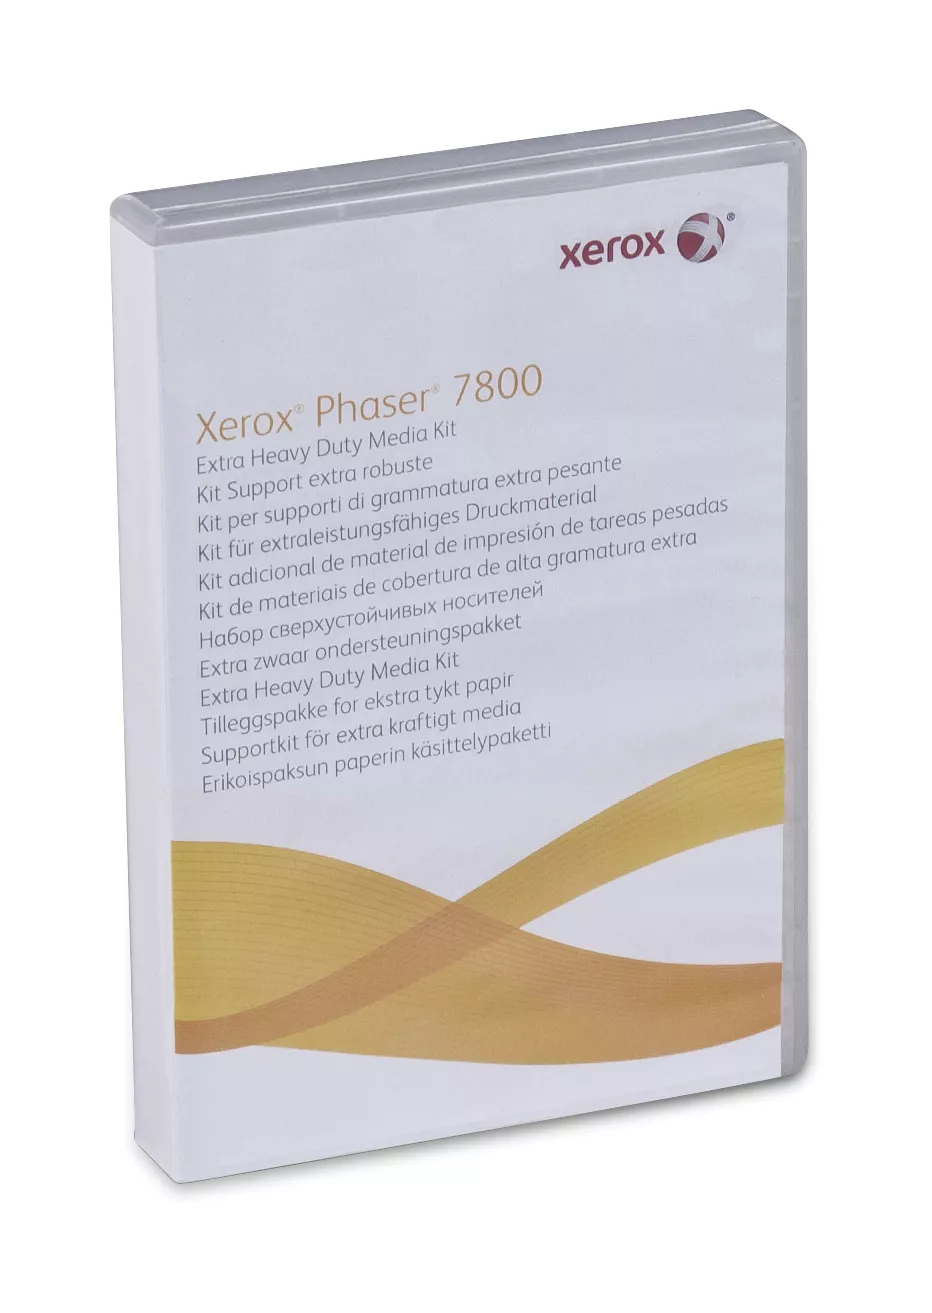 Achat Xerox Kit pour supports extra-lourds au meilleur prix